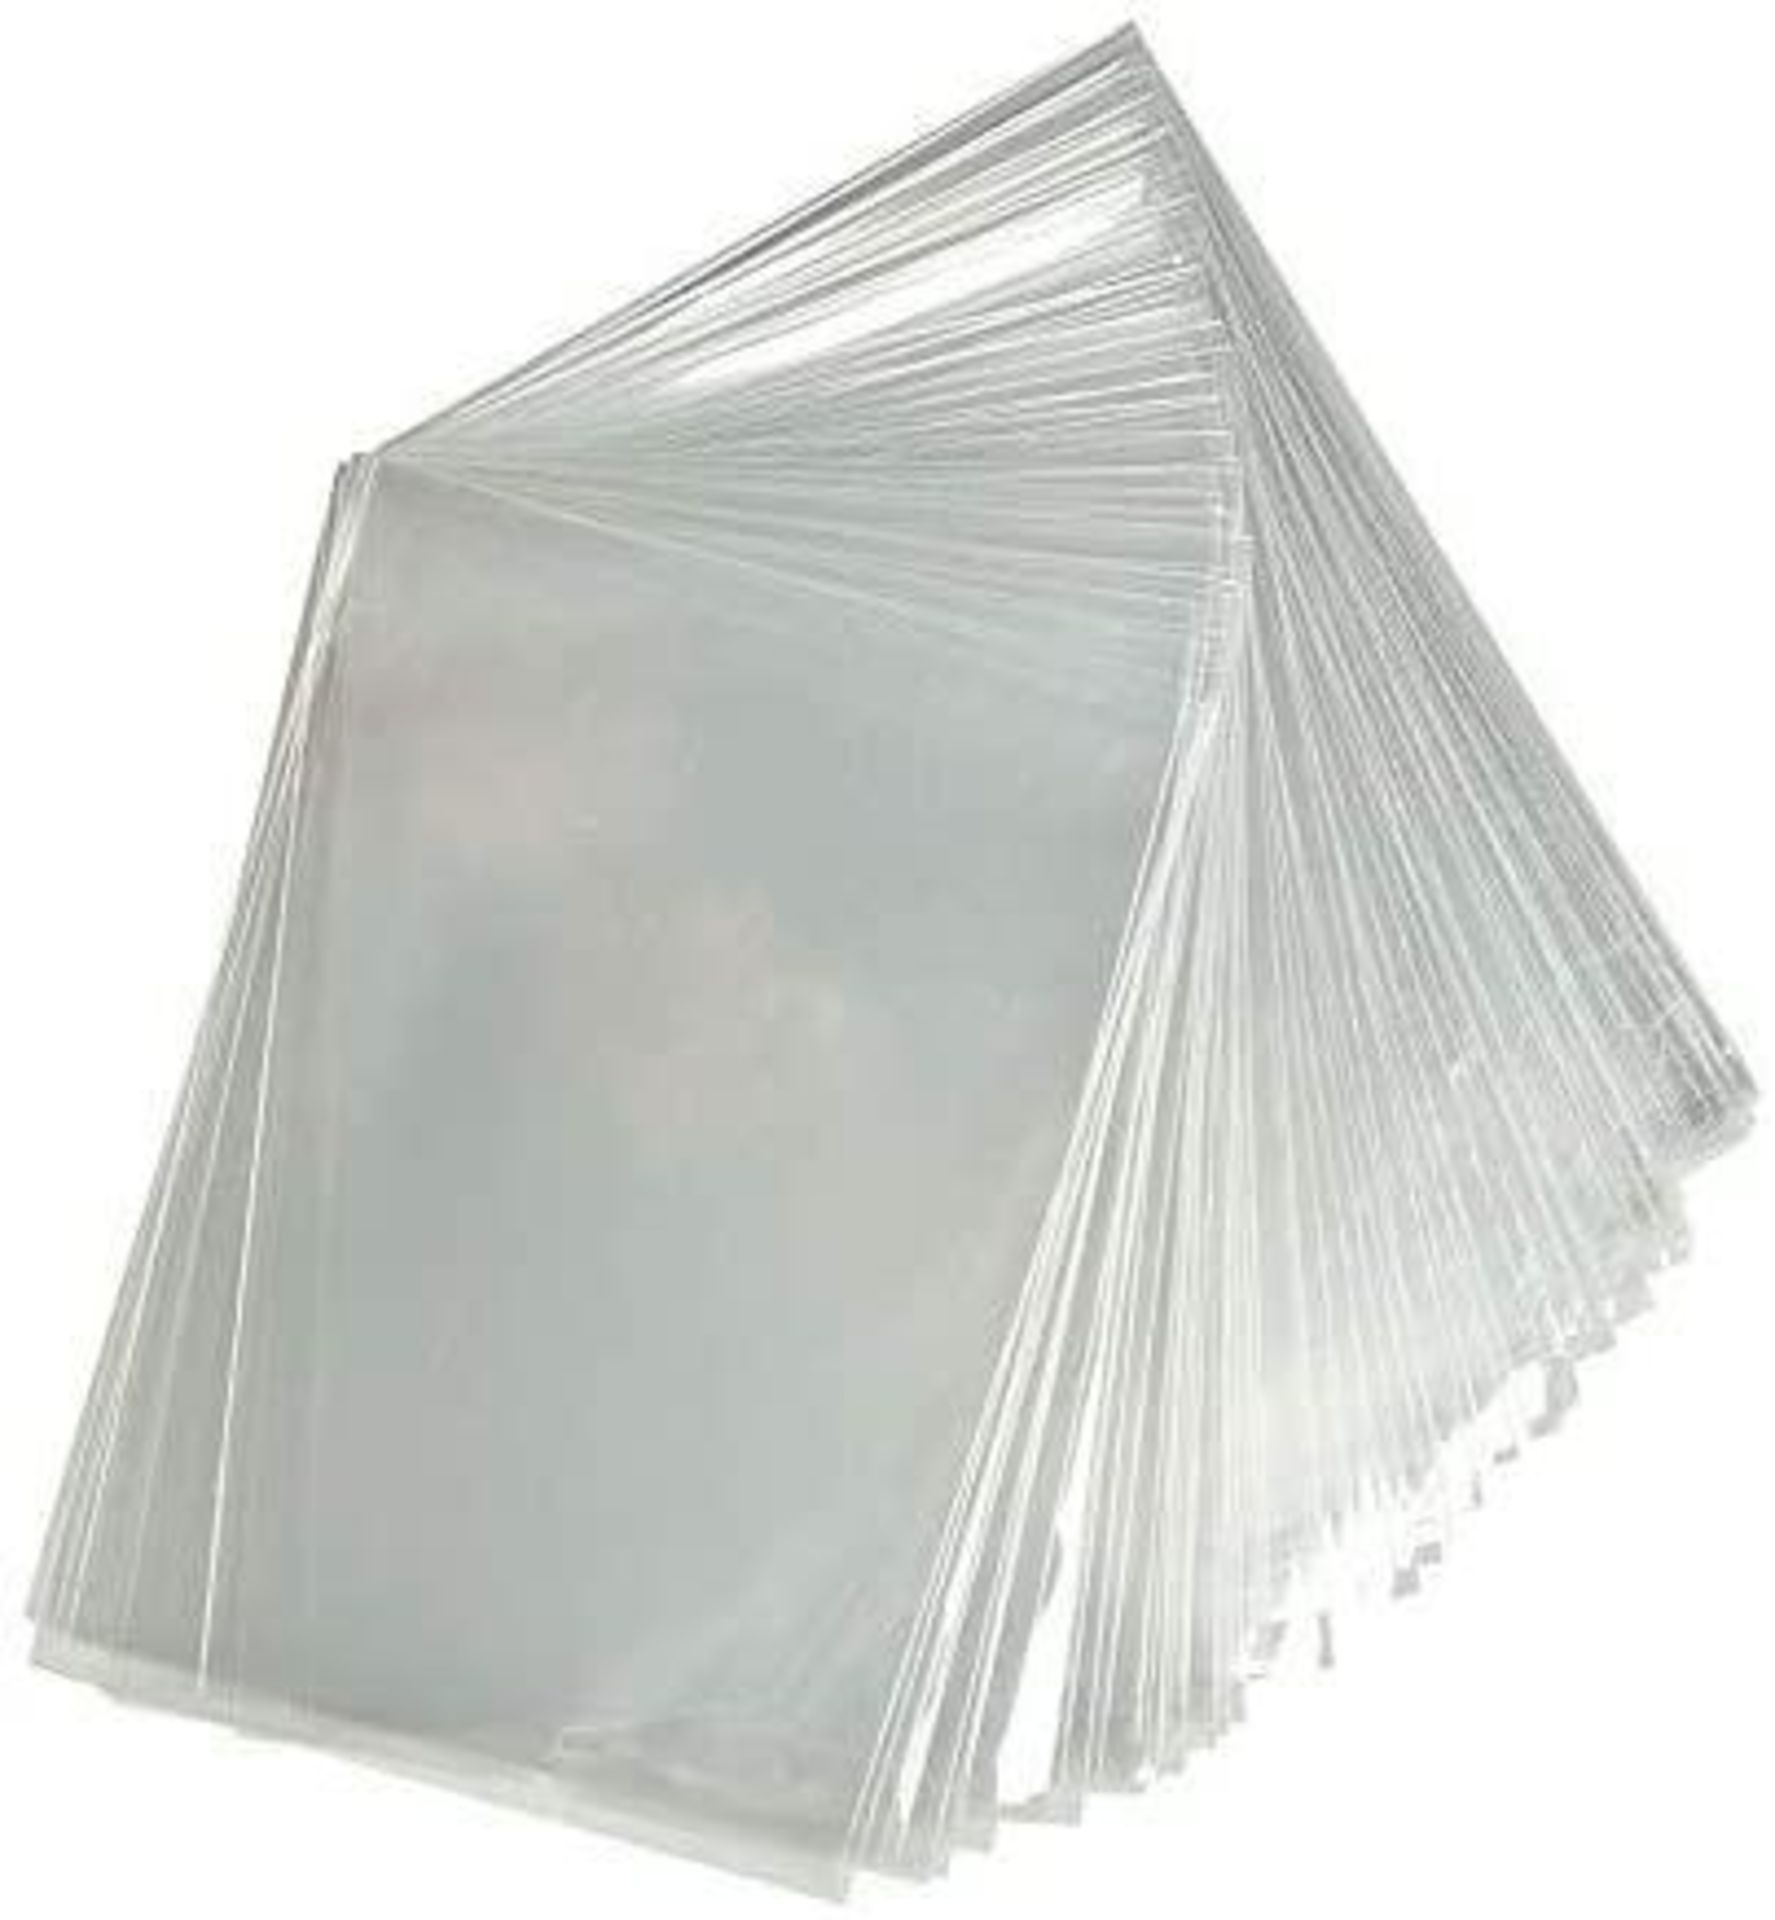 Pack of 250 - C5 Cellophane Greeting Card Display Bags